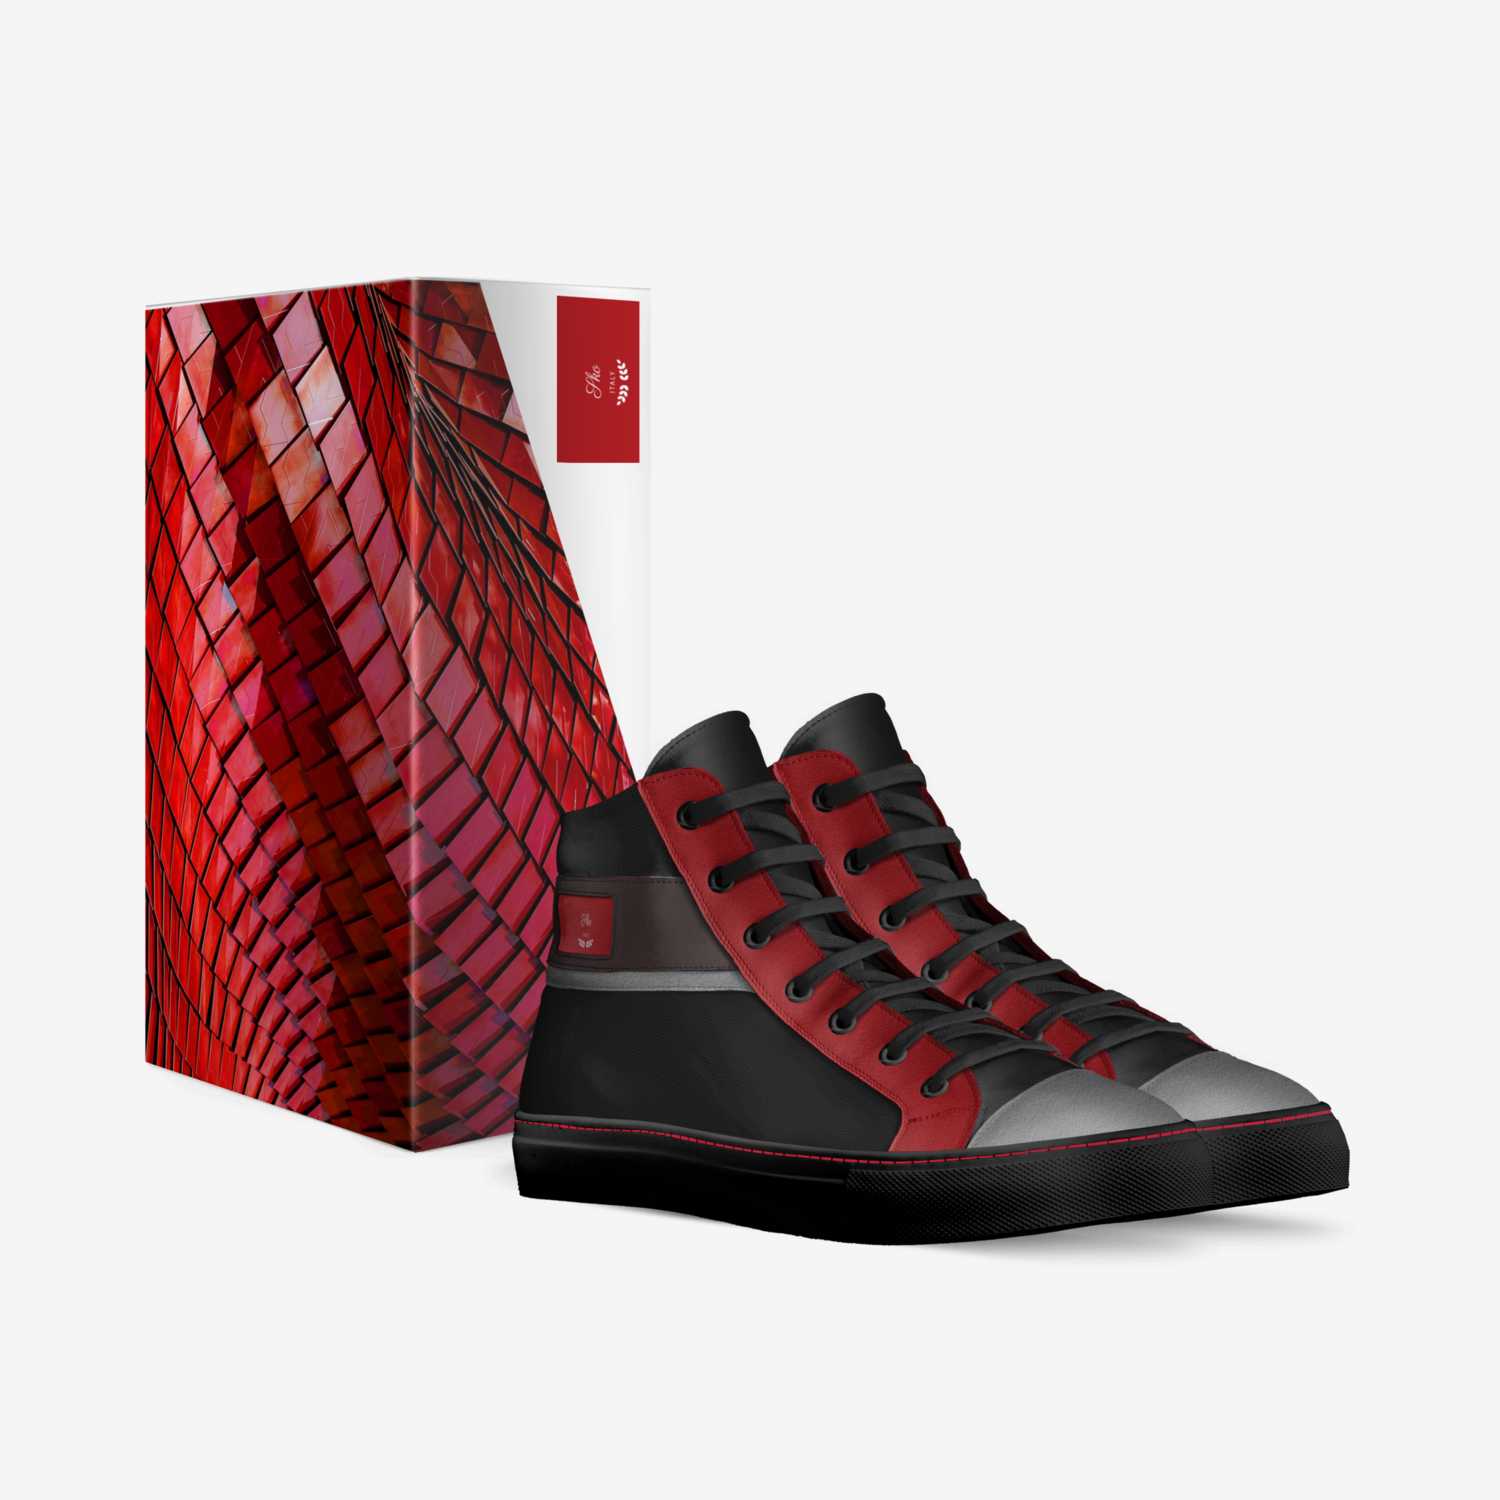 Sko custom made in Italy shoes by Gunvid 19 | Box view